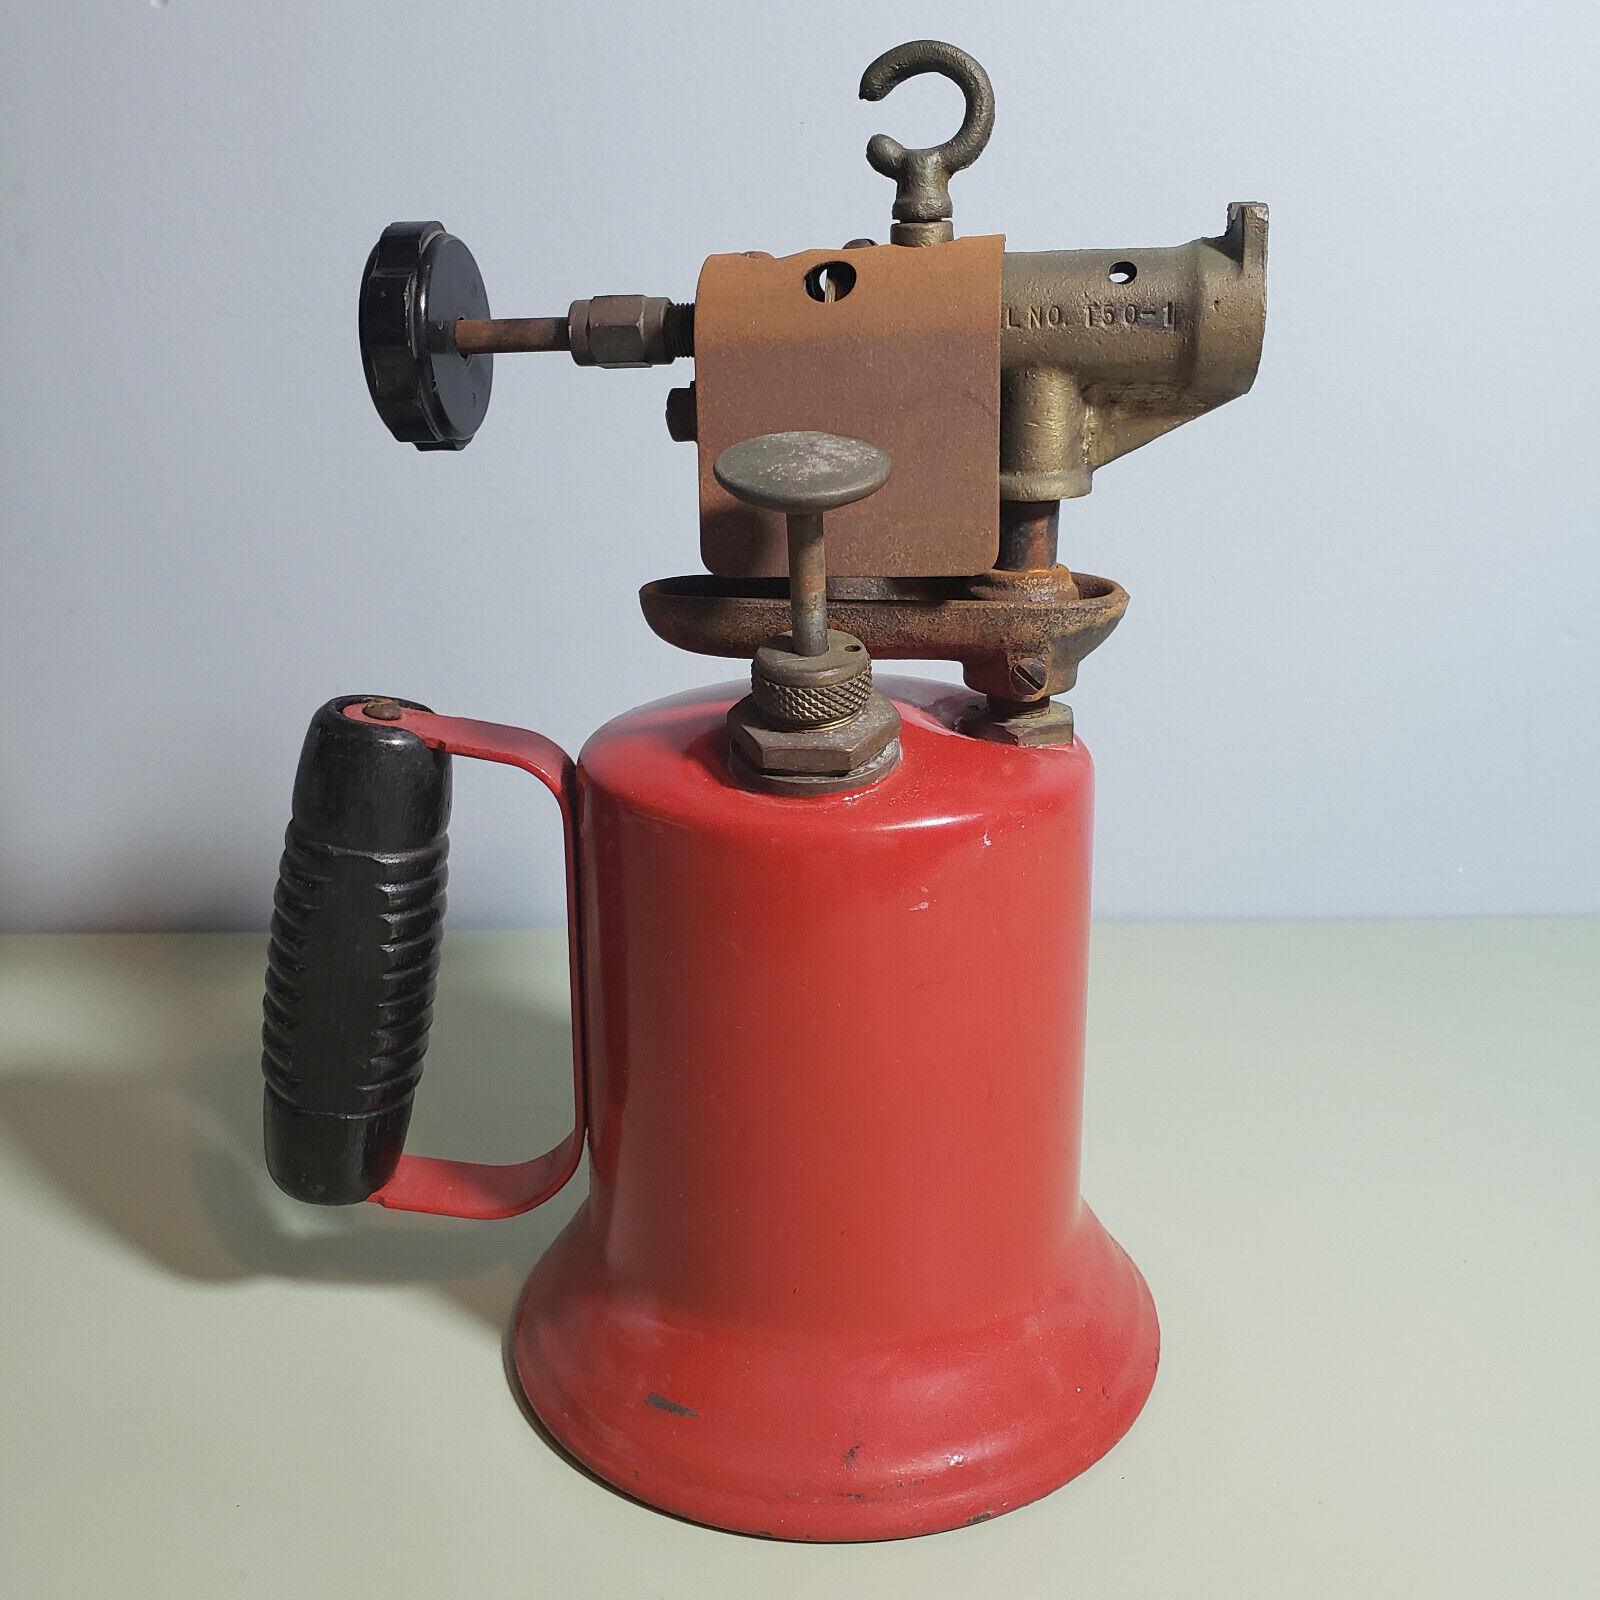 Vintage Turner Red Blow Torch - Model No. 150-1